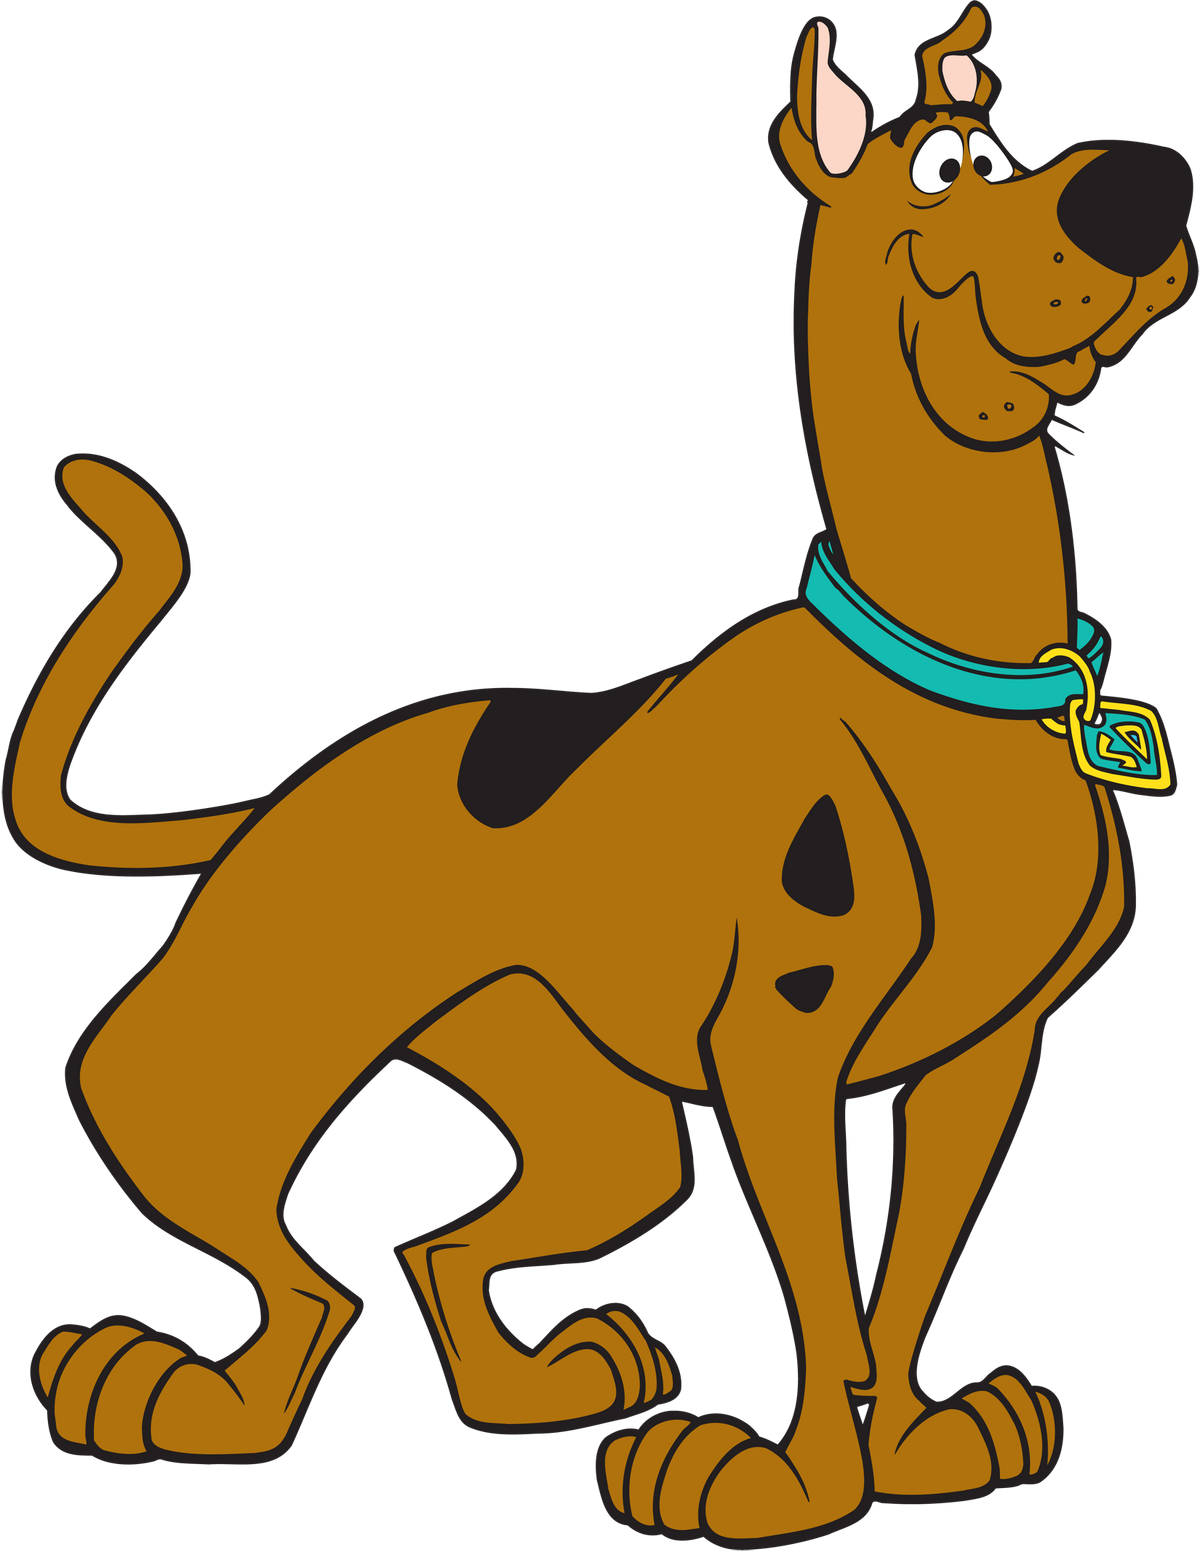 Scooby-Doo, Scooby-Doo characters